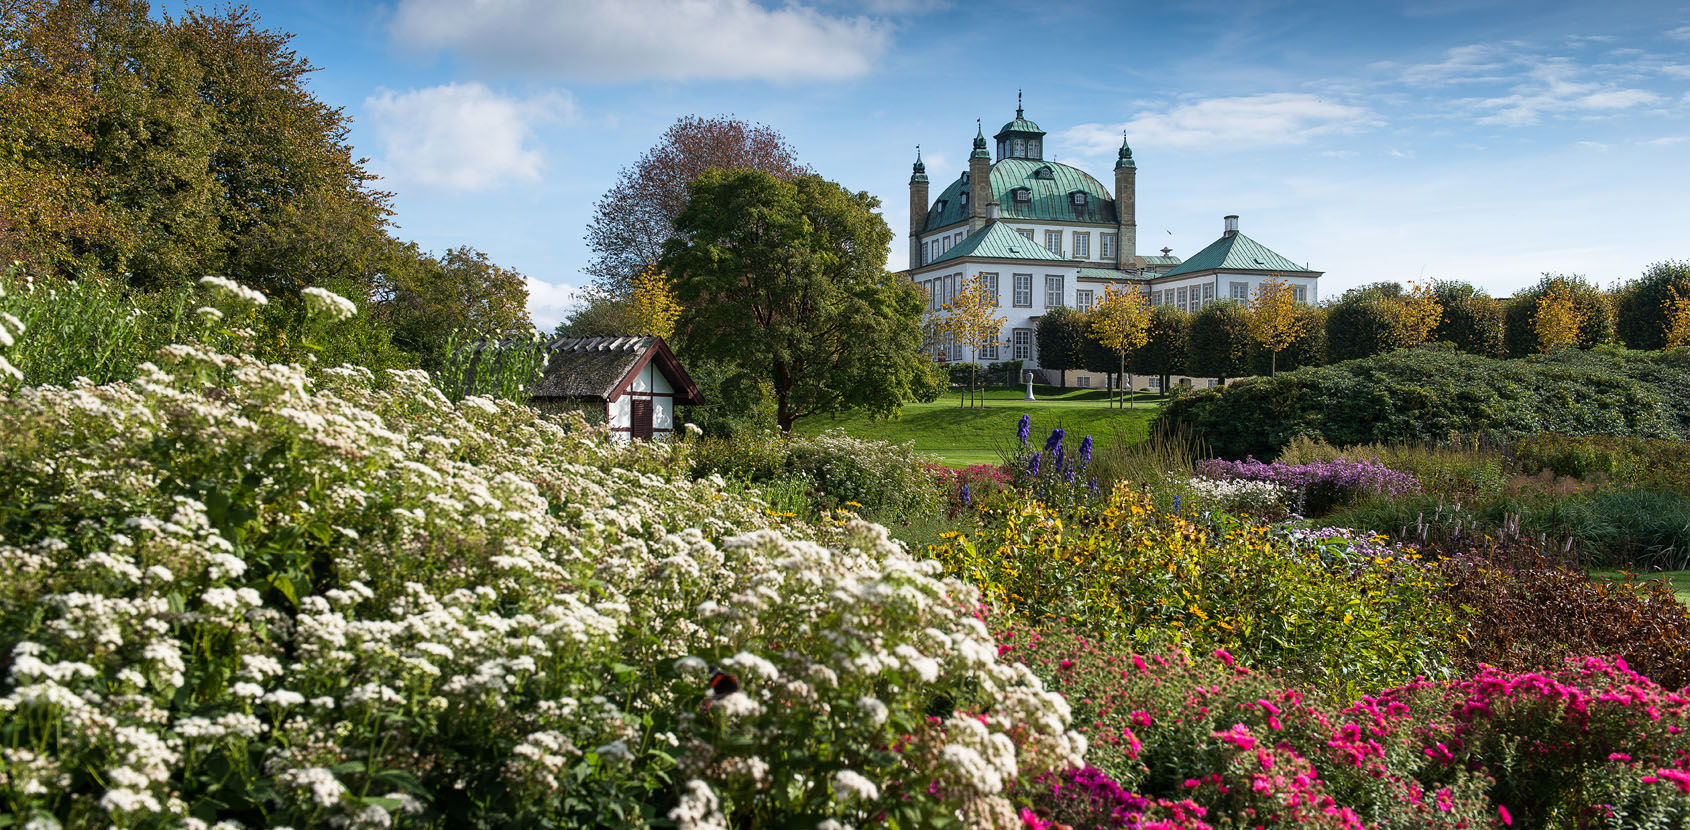 The Royal Family’s private garden at Fredensborg Palace. Photo: Thomas Rahbek